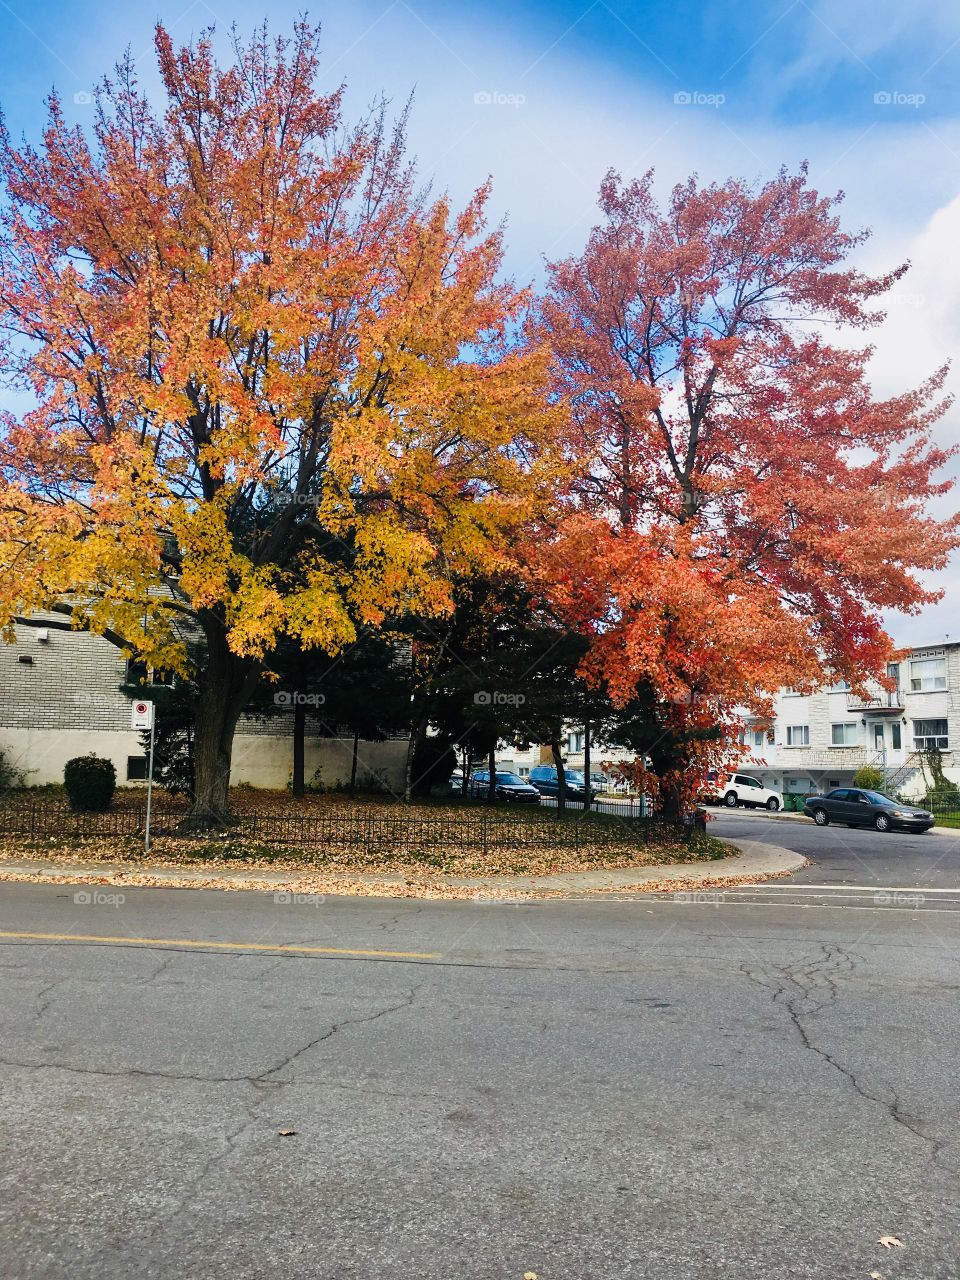 Autumn Tree 02-Octobre 22 2018-Montreal, Quebec, Canada